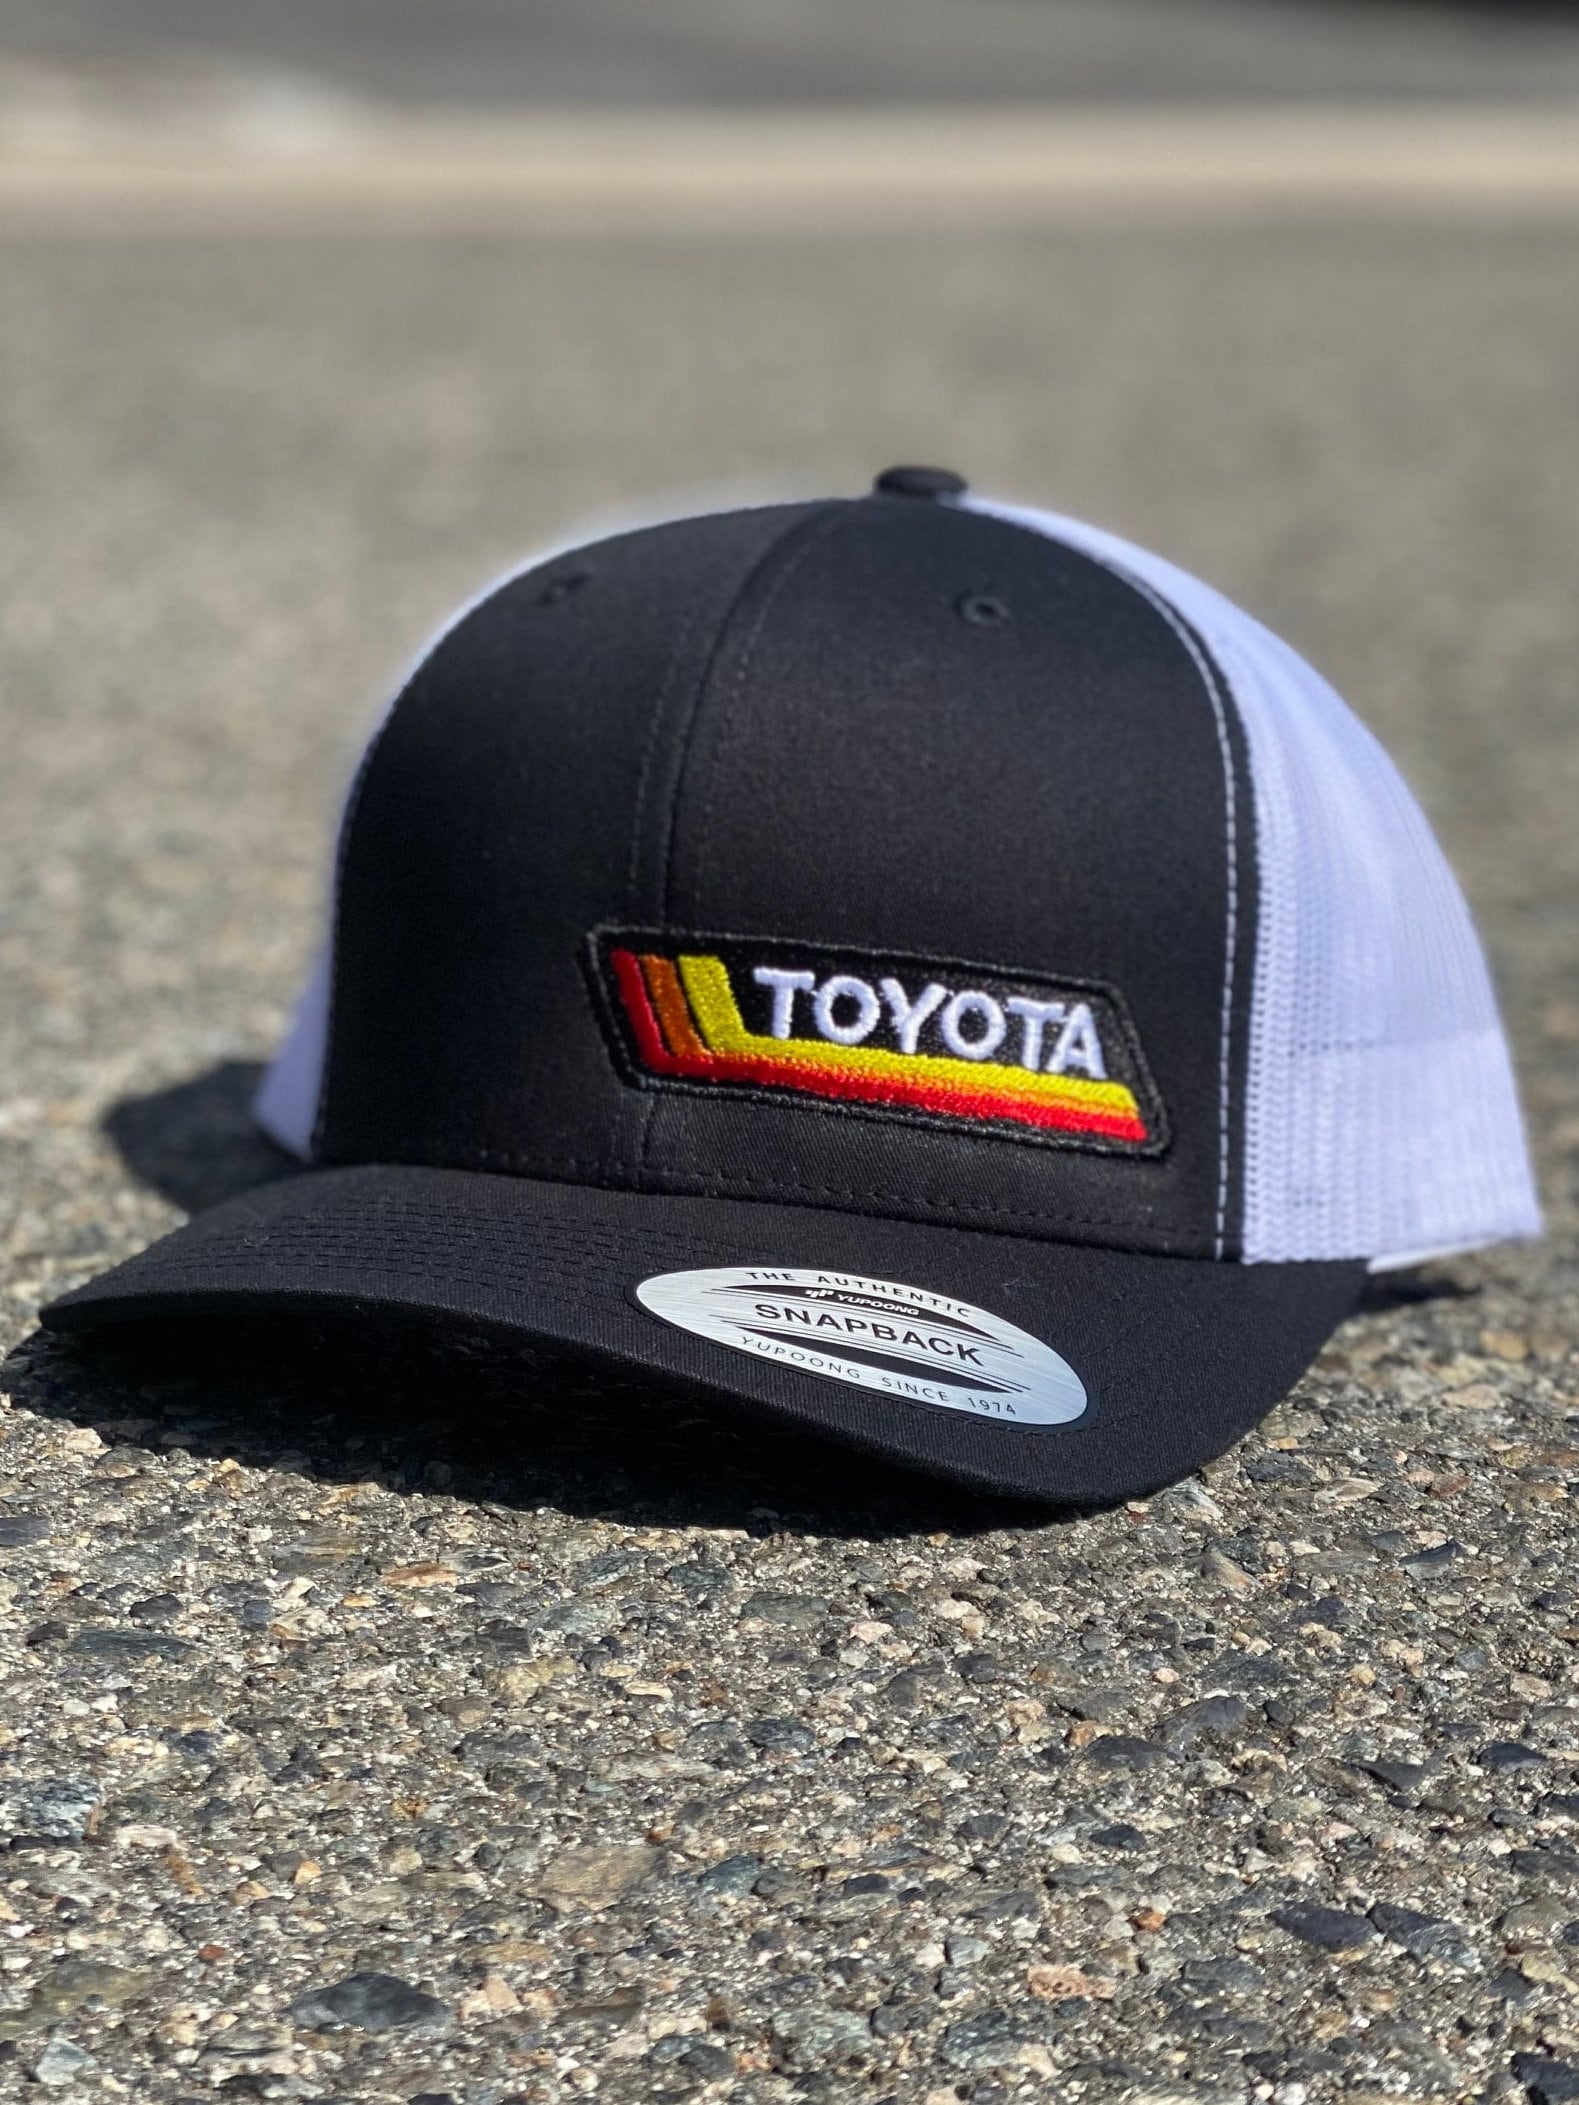 Brand New TRD Off Road Toyota Curved Bill Hat Cap Snapback Trucker Hat unisex